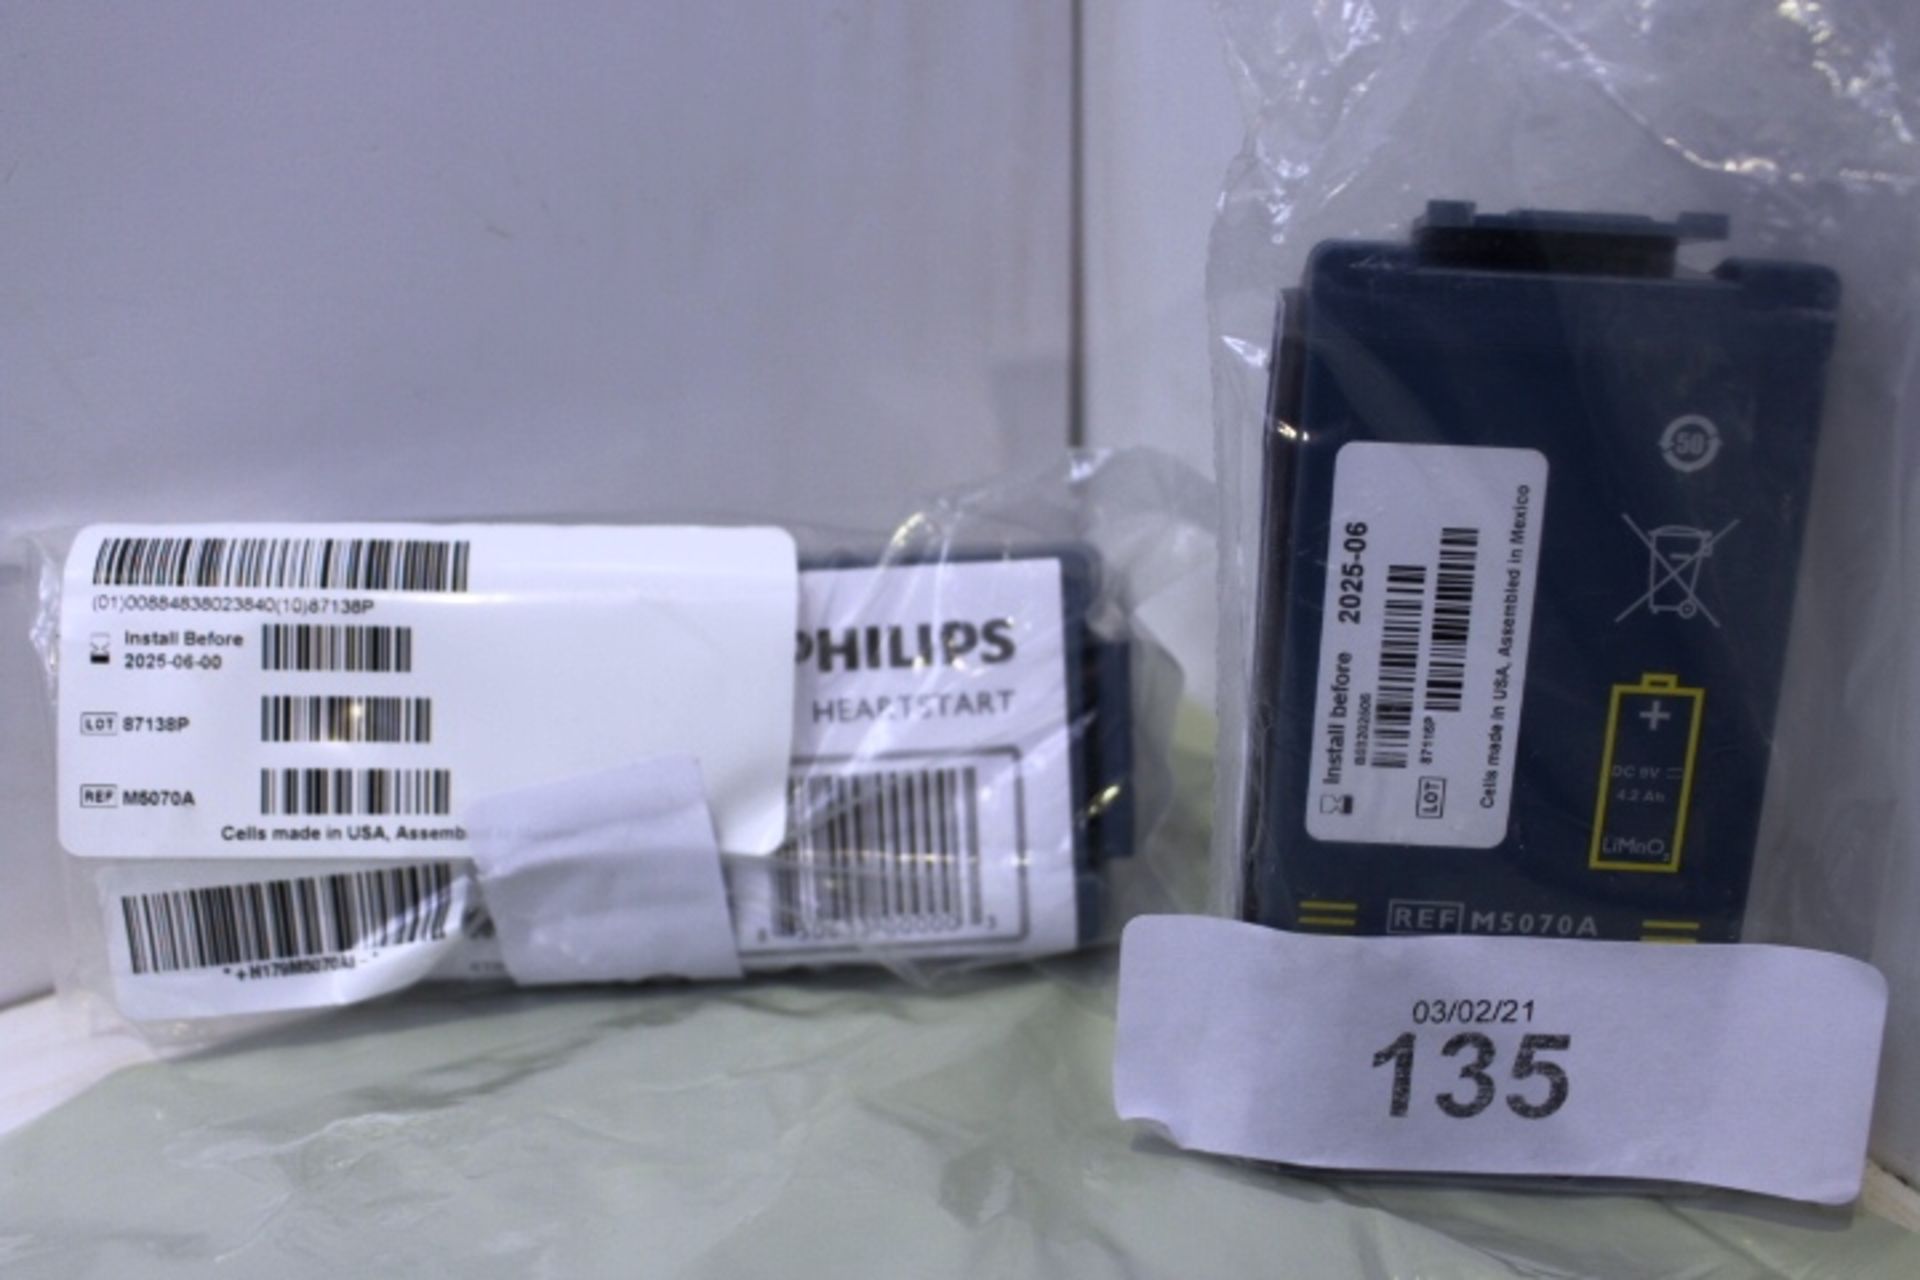 2 x Philips Hartstart HS1 and FRX defibrillator batteries, Ref: STJHS1LITH, RRP £124.50 each,